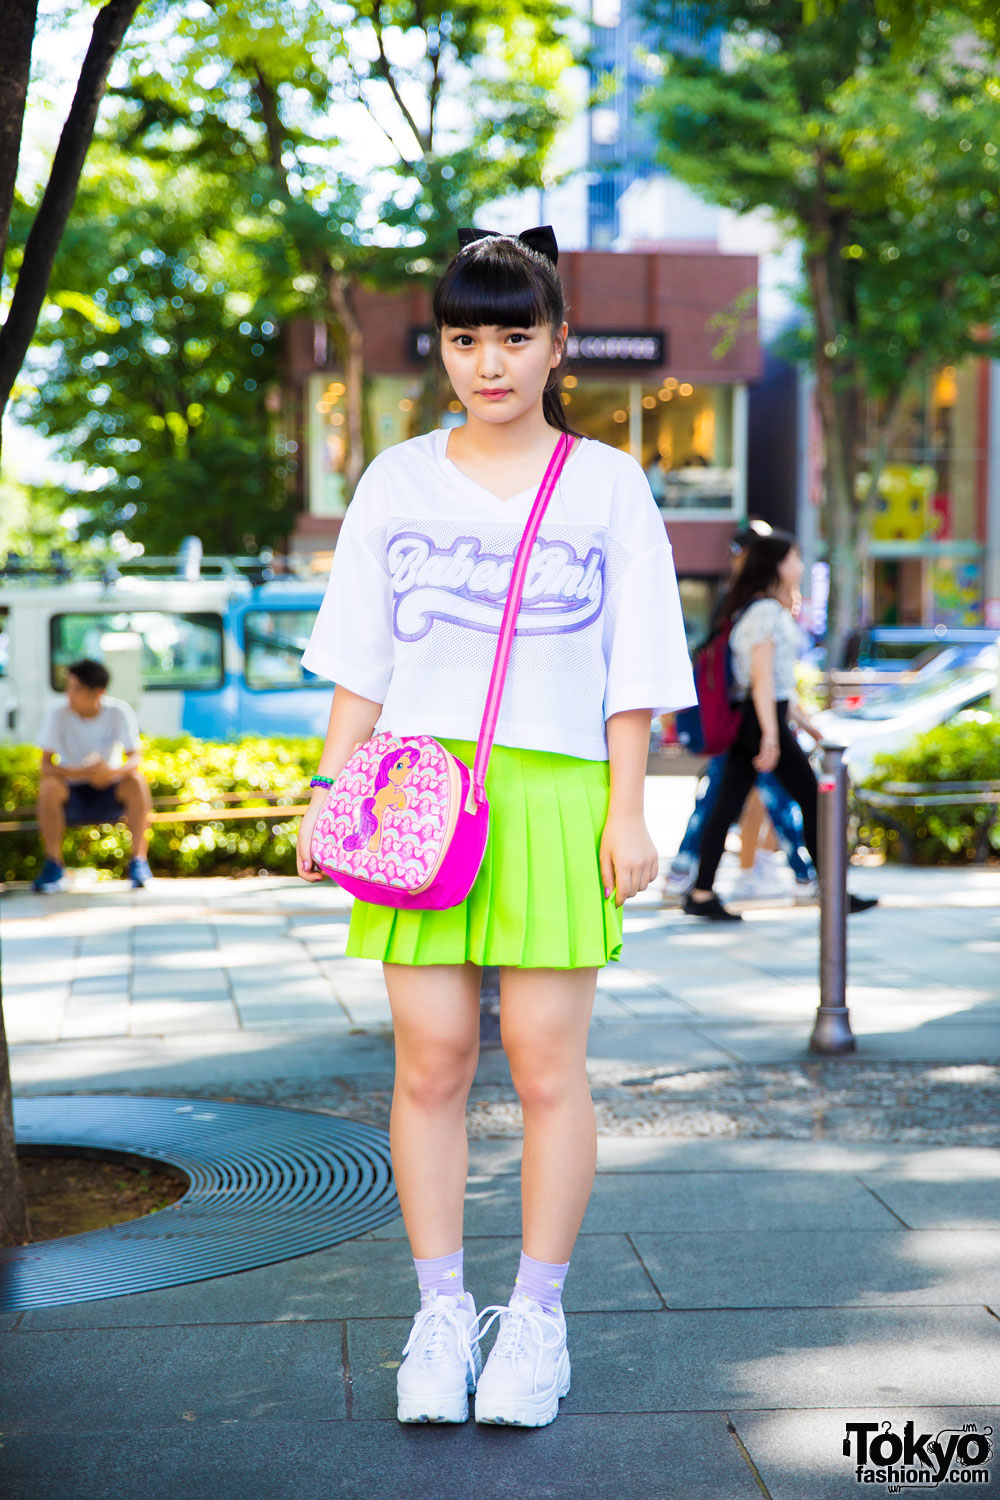 Harajuku Girl in Neon Skirt, My Little Pony Bag & Sneakers